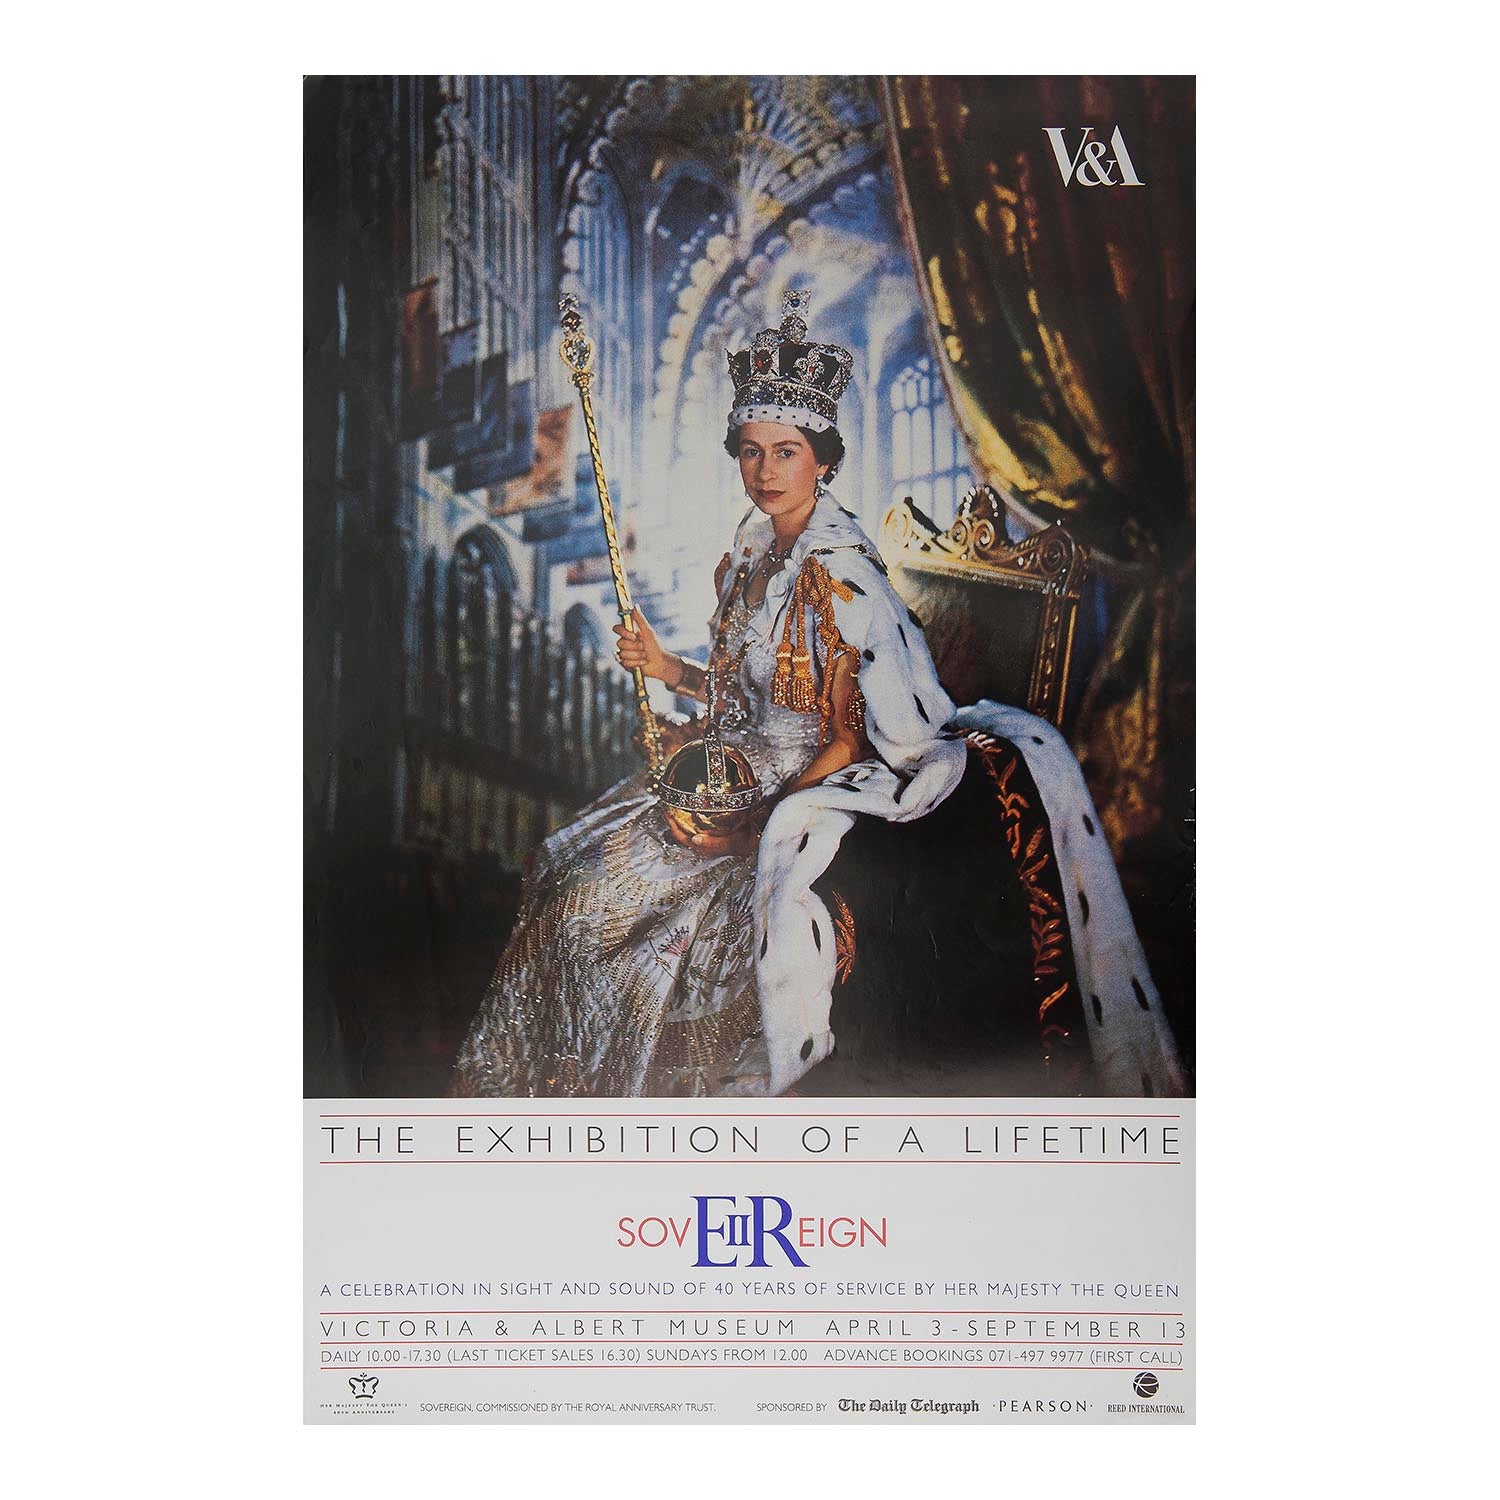 Original exhibition poster, The Exhibition of a Lifetime, Sovereign, Victoria & Albert Museum, 1992